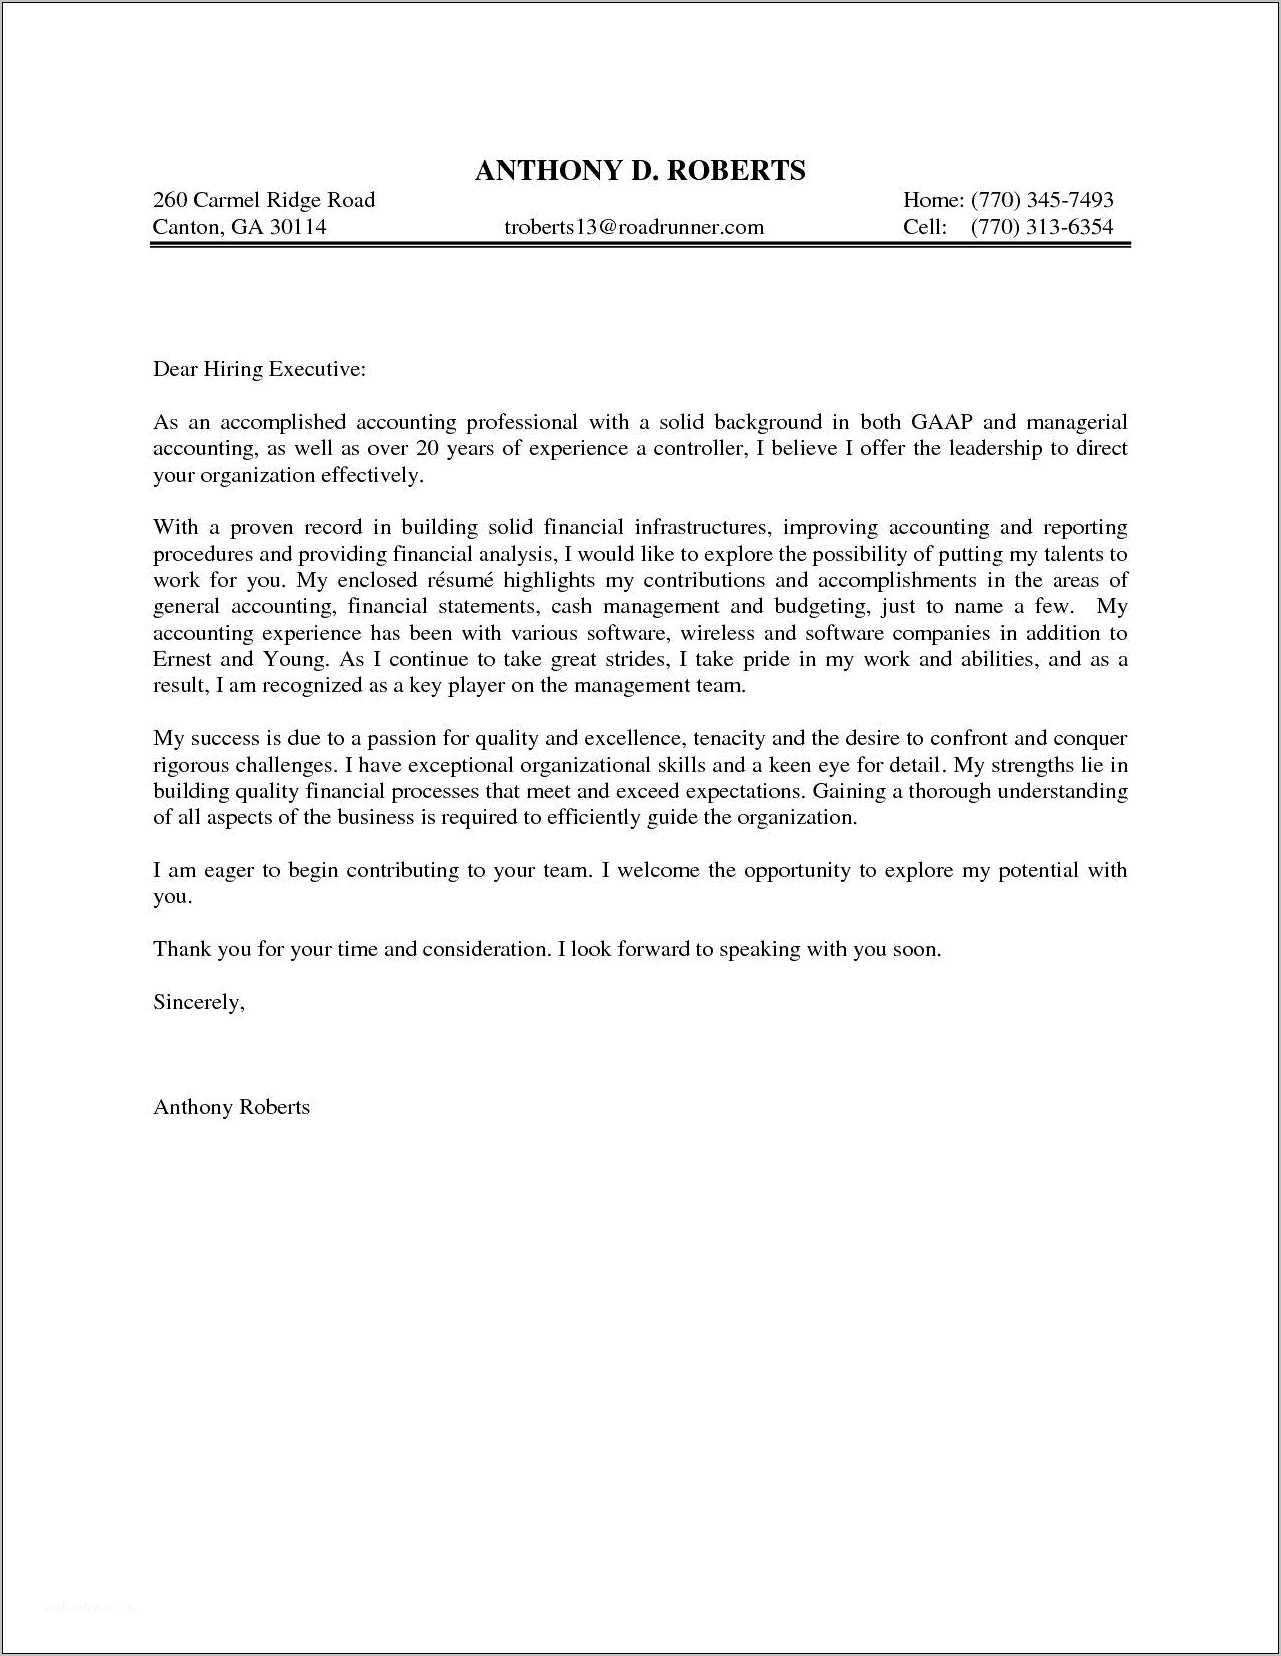 Fax Cover Letter Sample For Resume